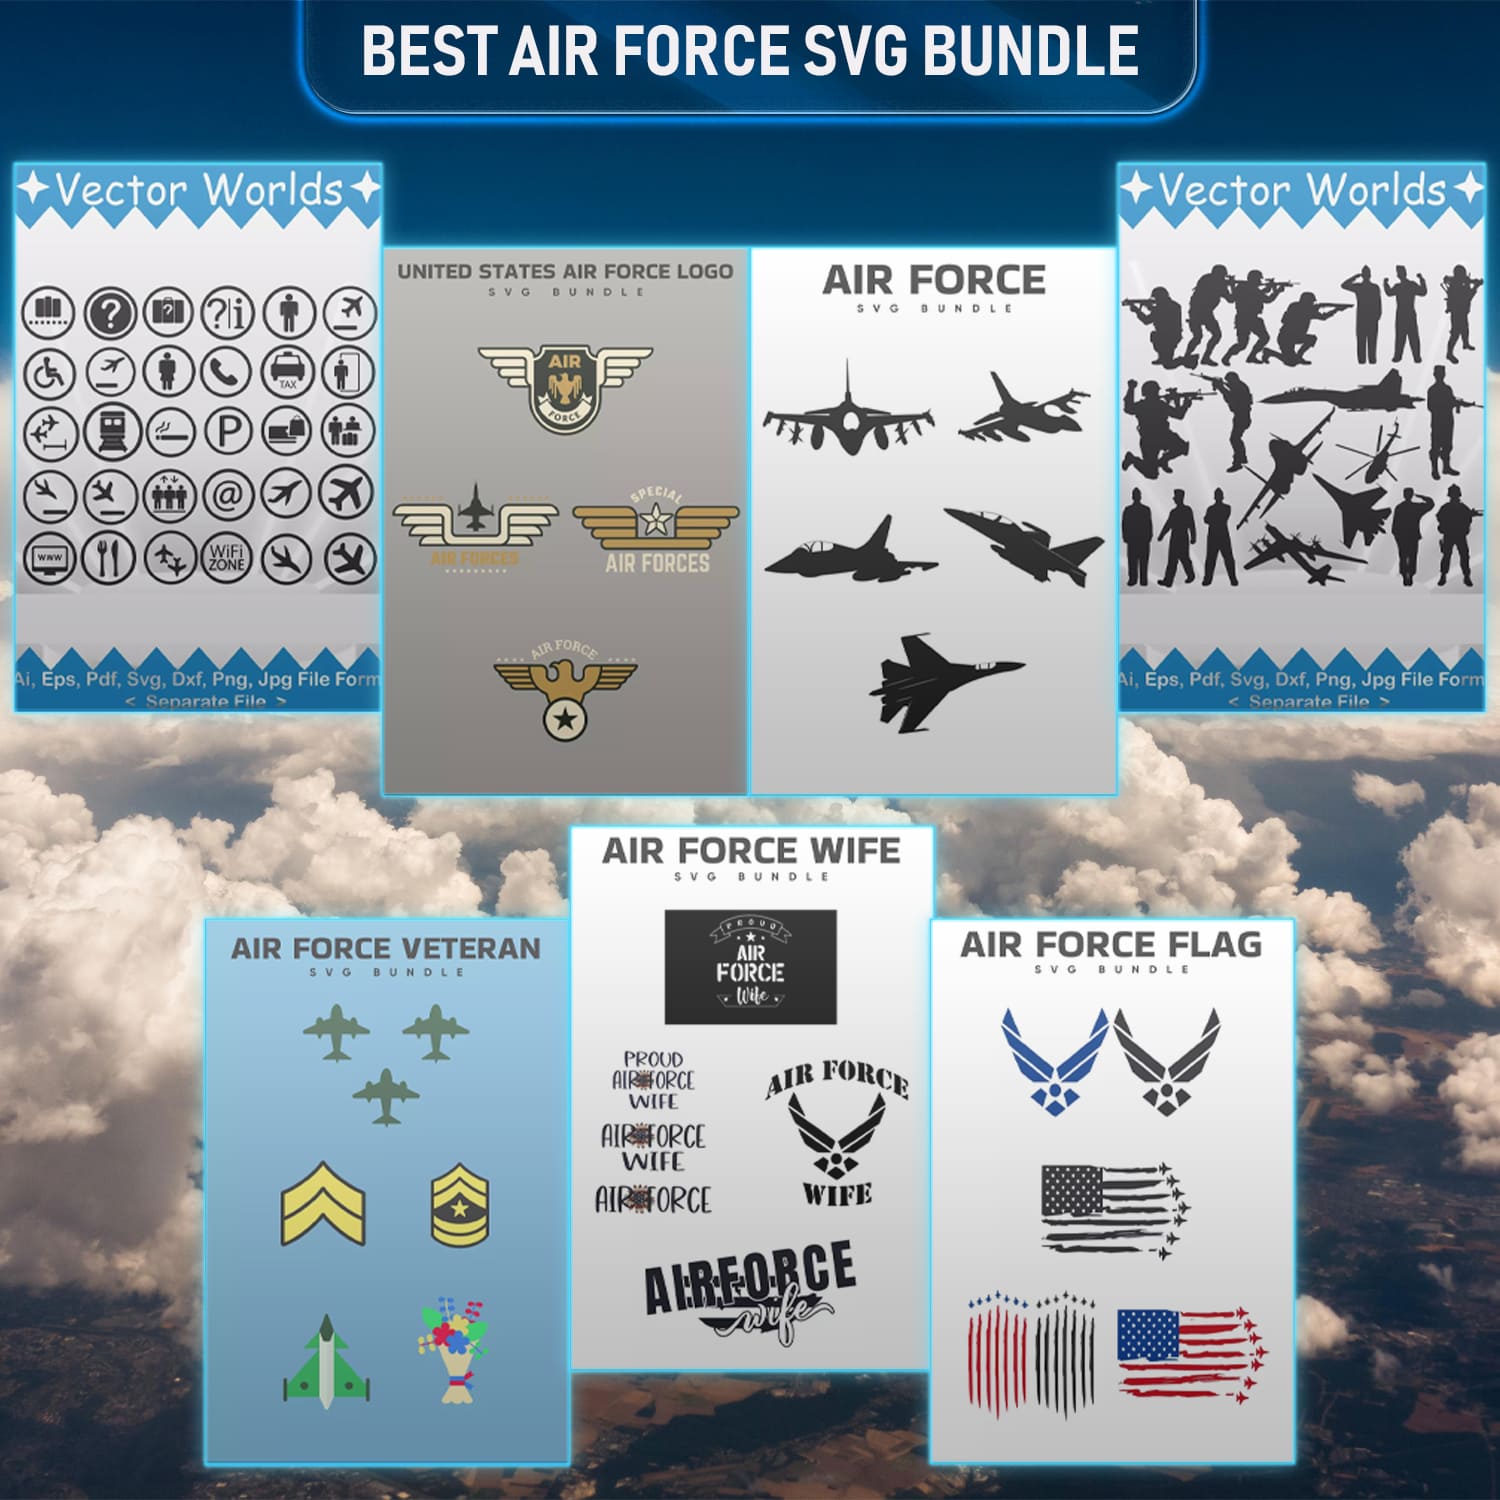 Best Air Force SVG Bundle cover image.